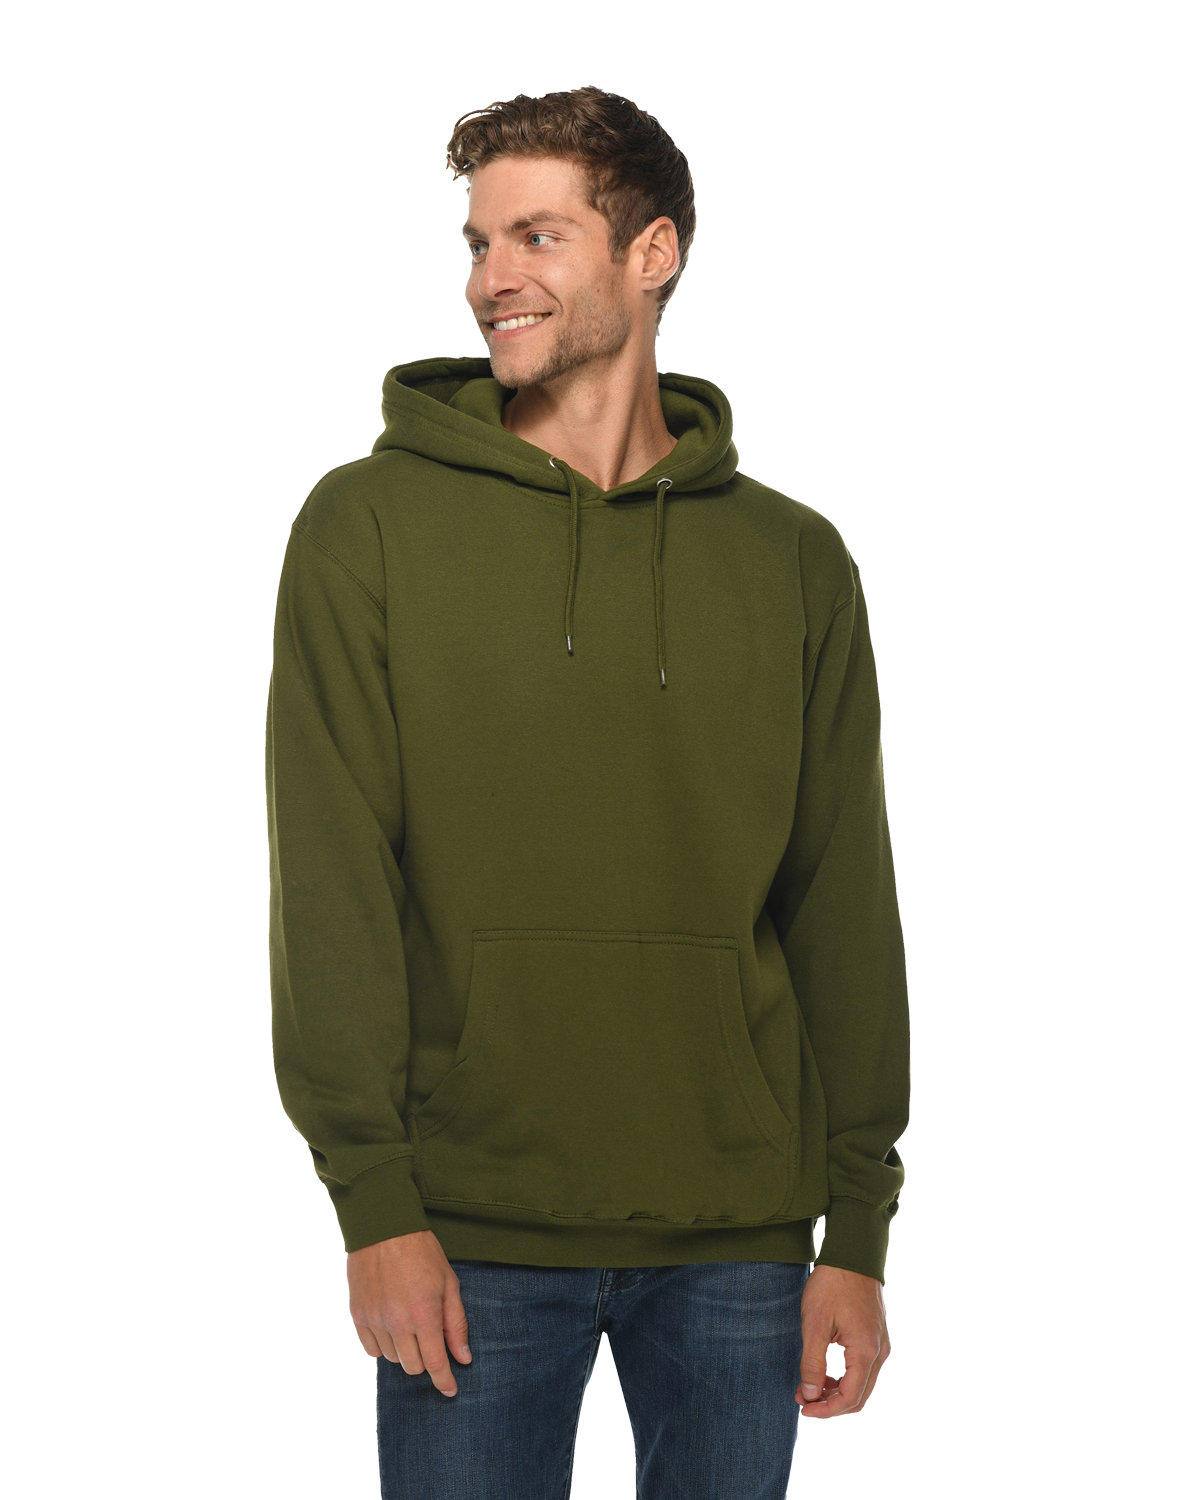 Lane Seven Unisex Premium Pullover Hooded Sweatshirt ARMY GREEN 